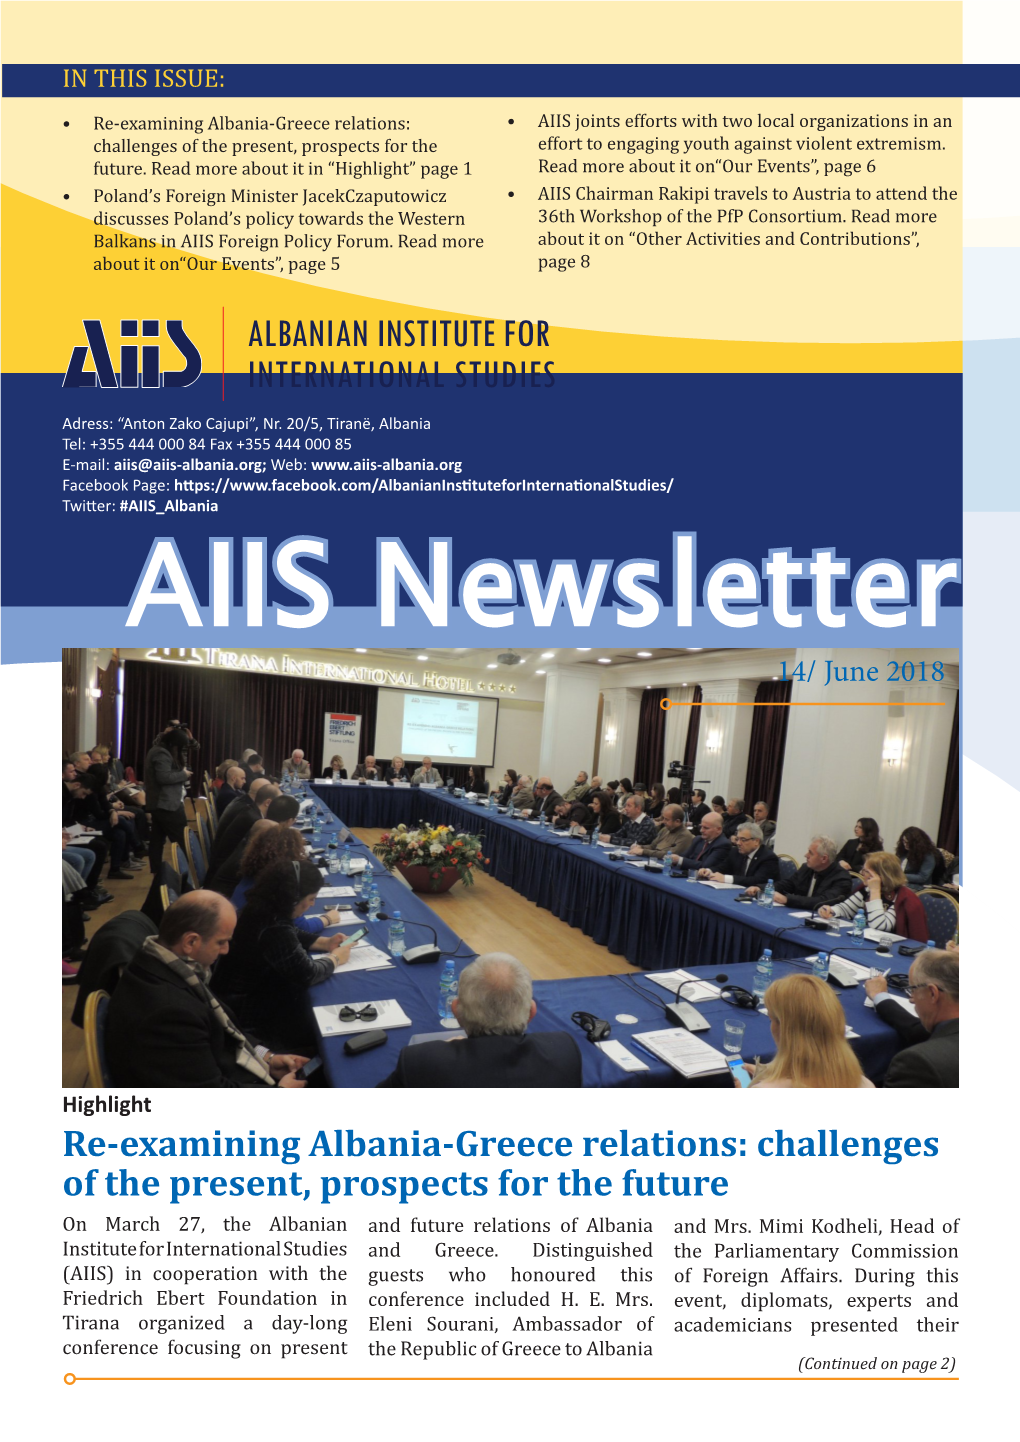 Re-Examining Albania-Greece Relations